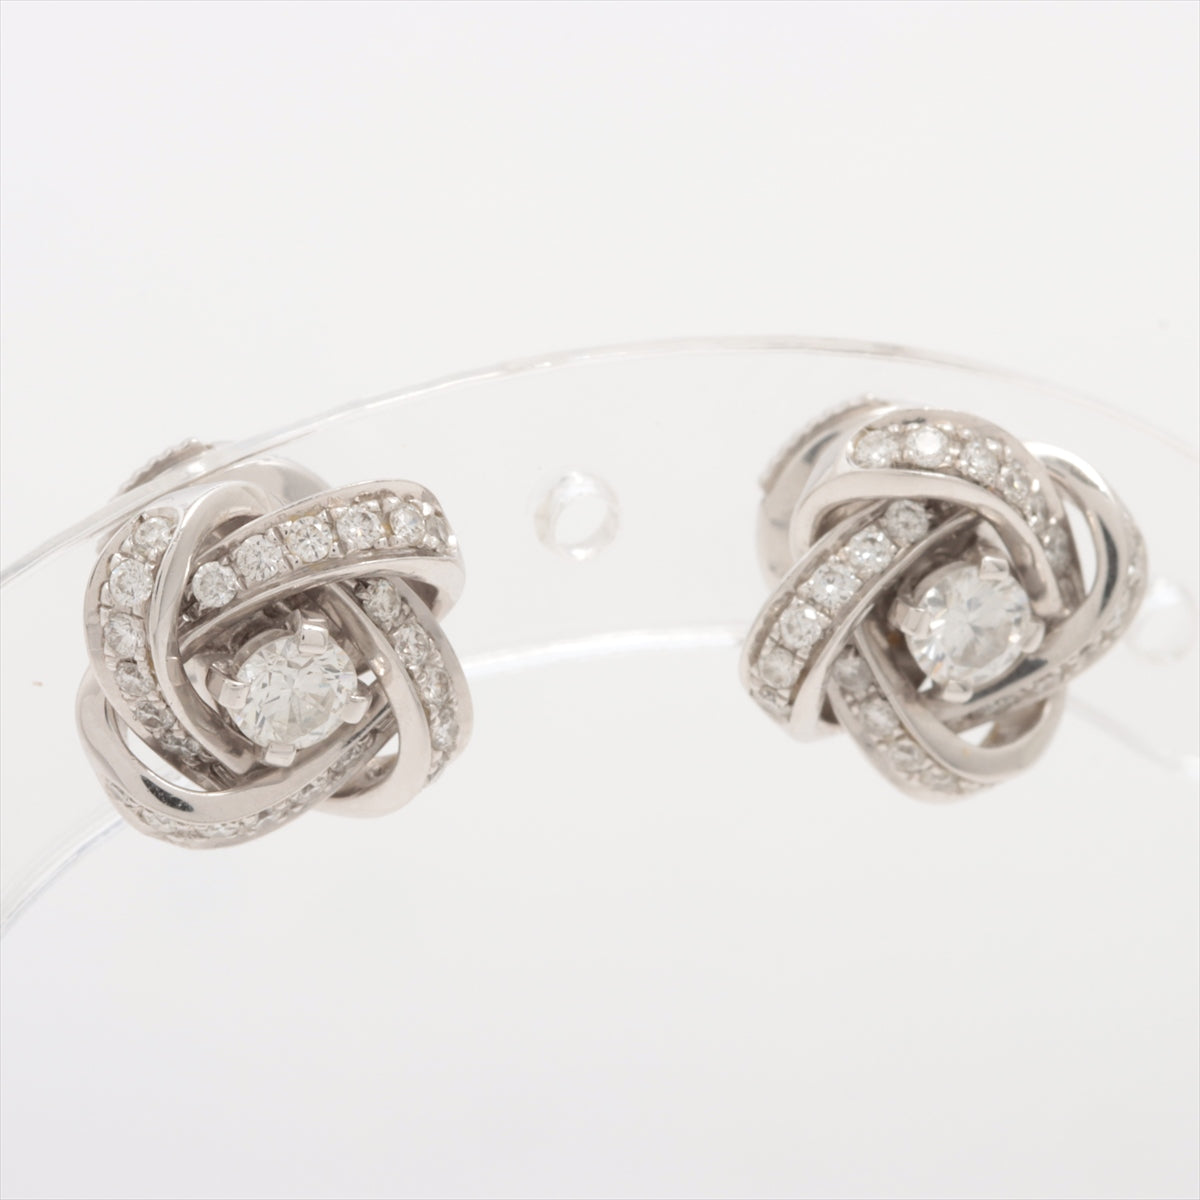 Boucheron Ava Pivoine diamond Piercing jewelry 750(WG) 4.7g Diamond diameter about 3.30mm